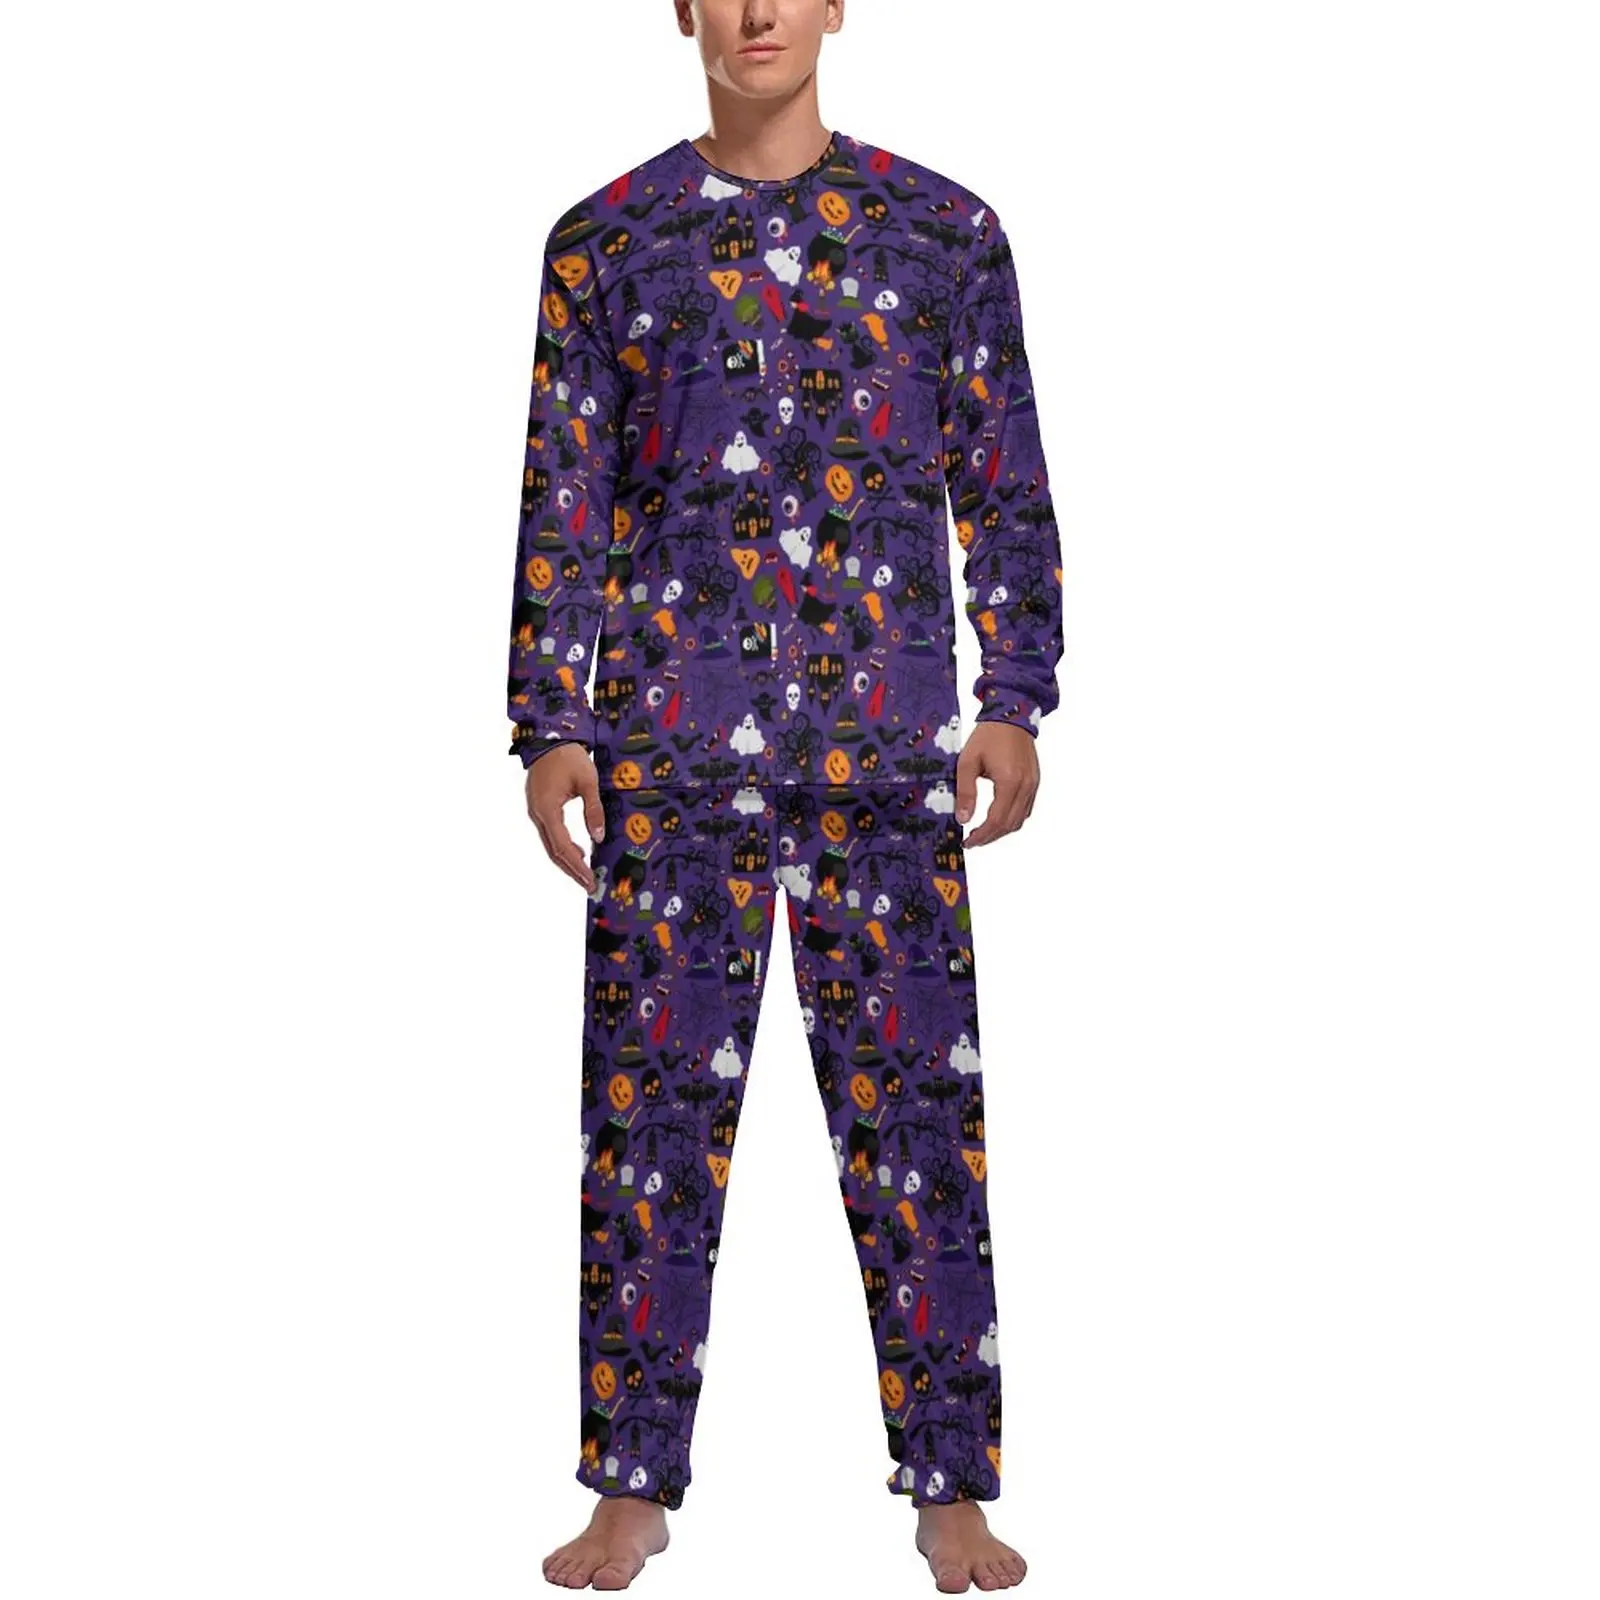 Cartoon Witch Pajamas Boo Halloween Print Man Long Sleeve Cute Pajama Sets 2 Pieces Bedroom Autumn Design Nightwear Gift Idea